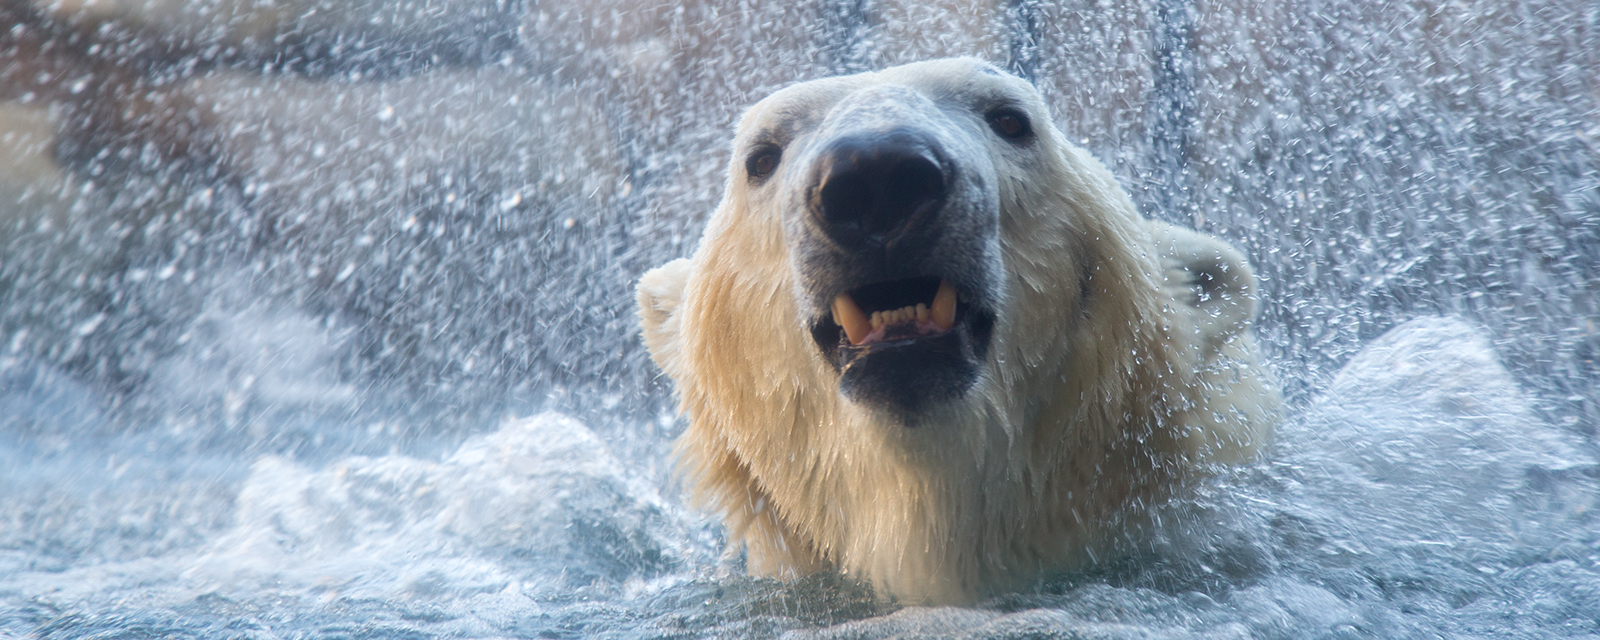 Polar bear swimming in exhibit